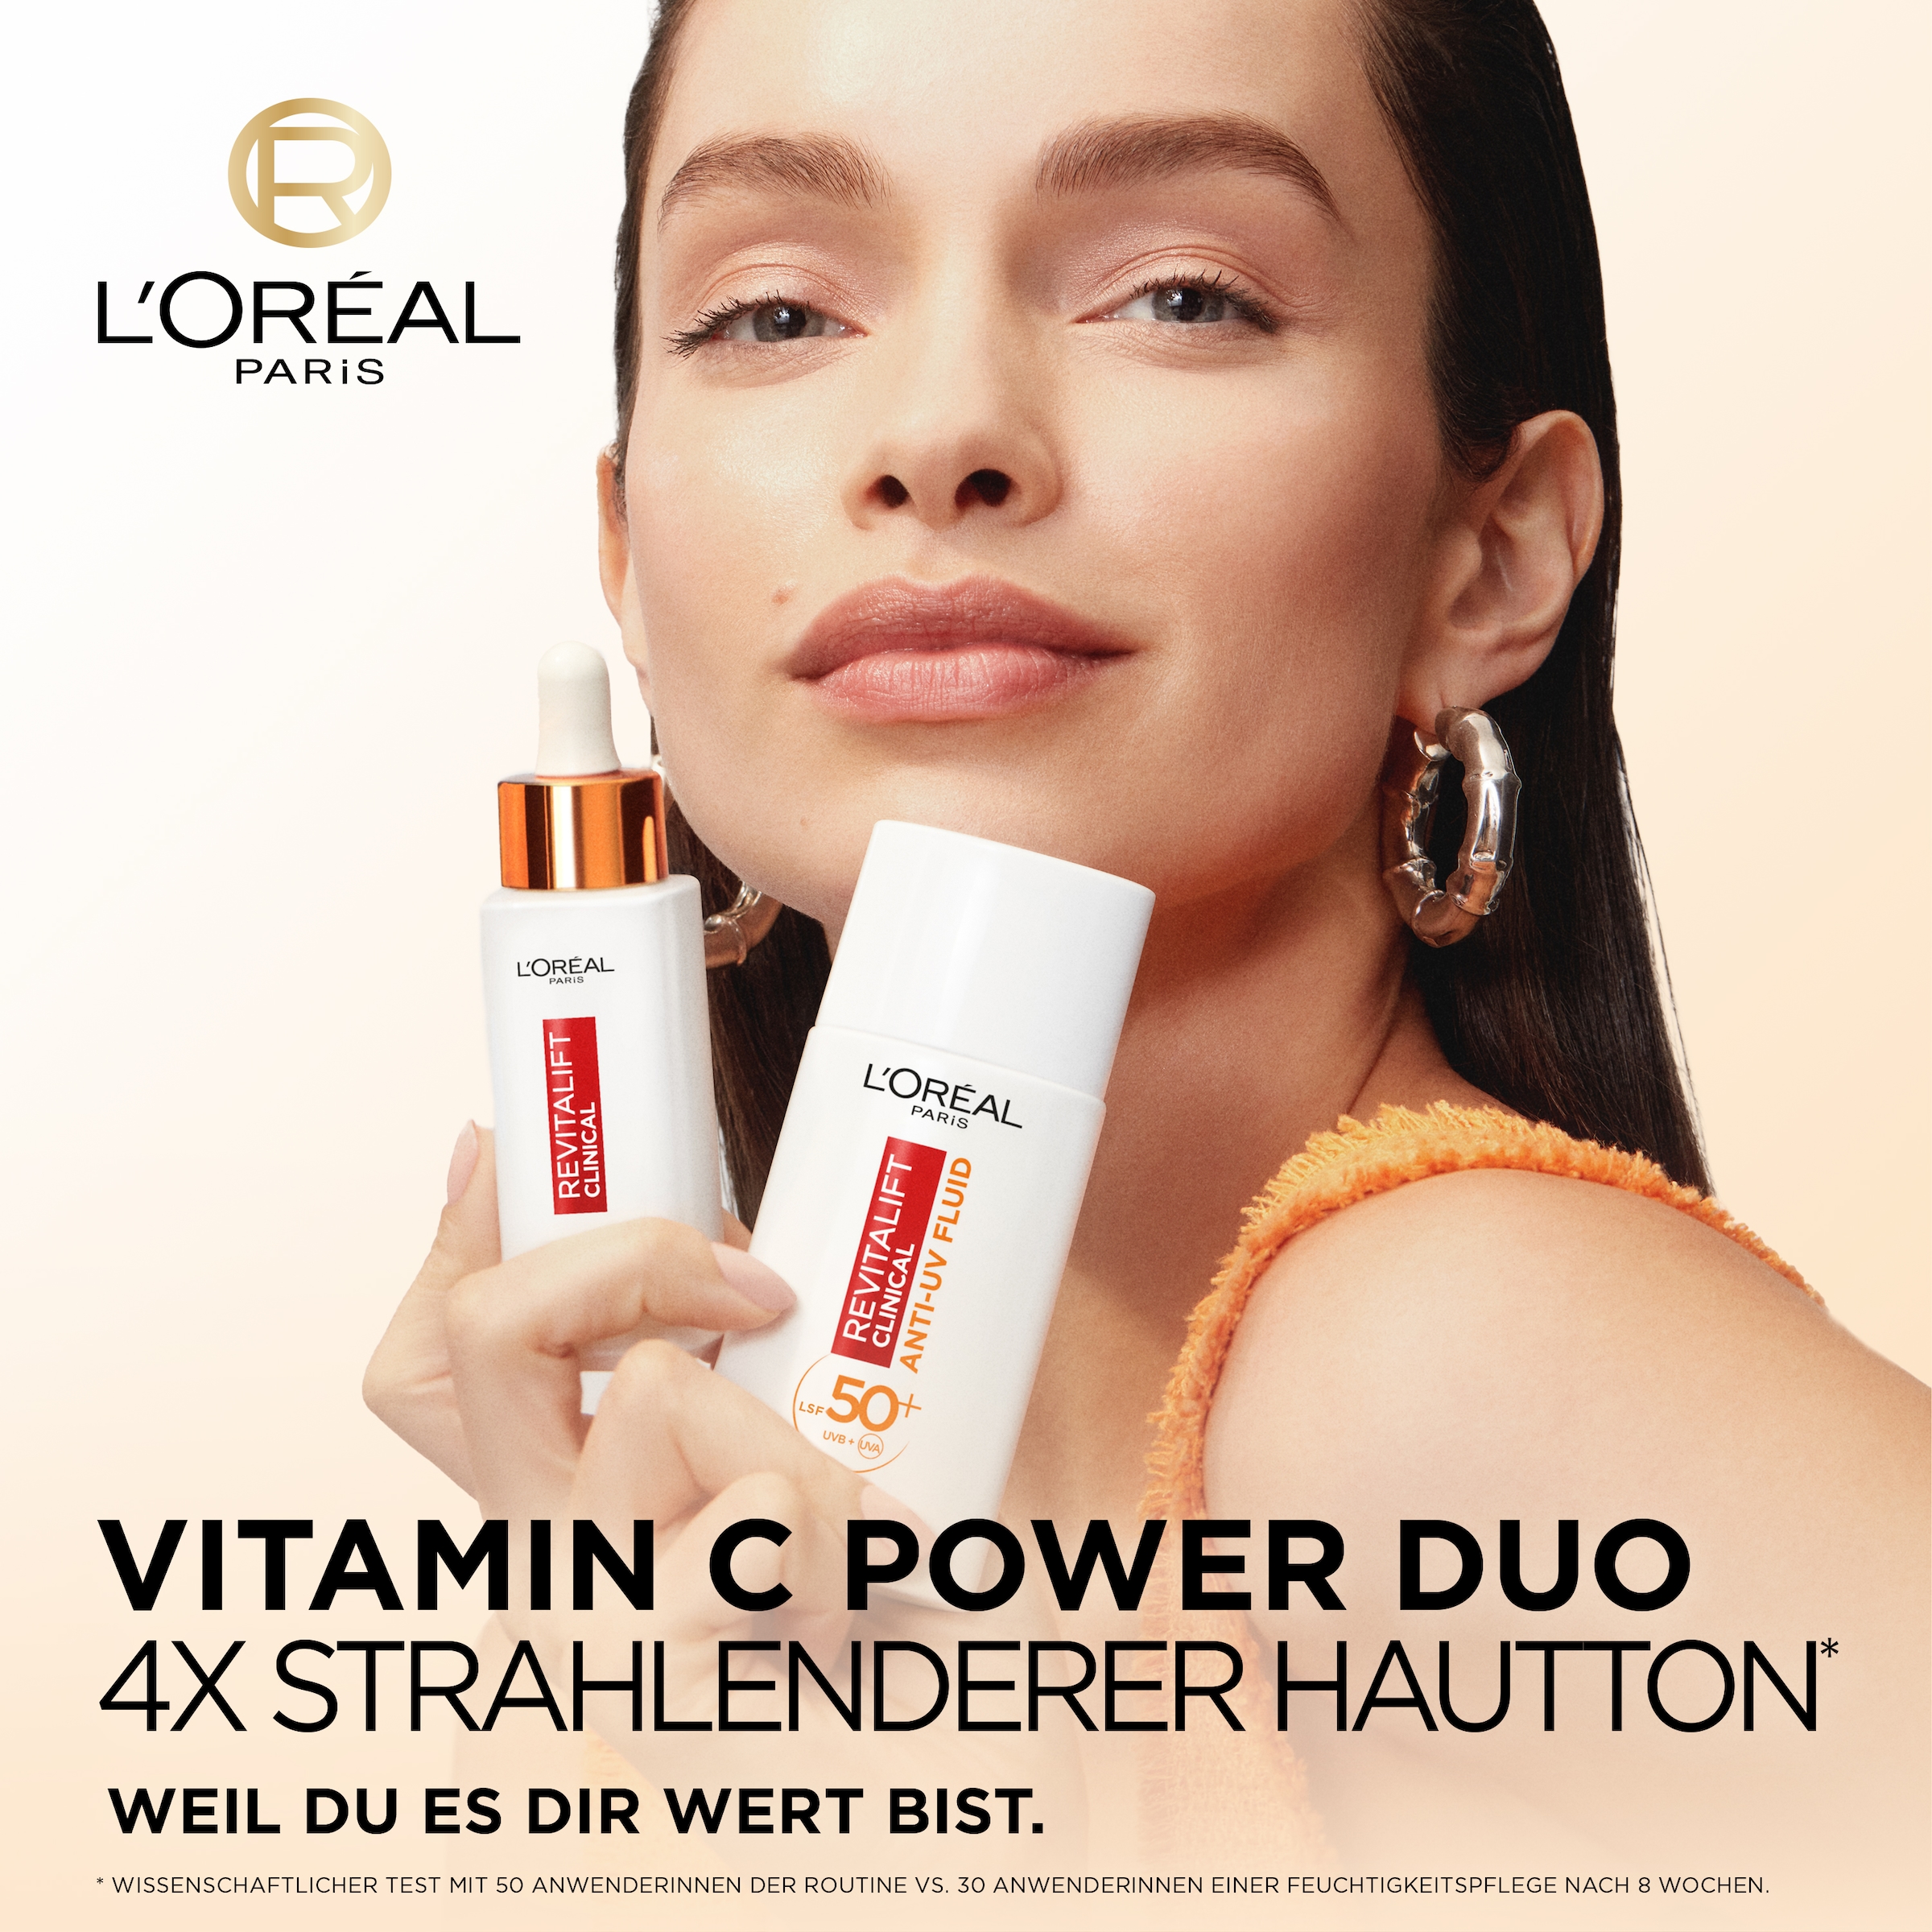 L'ORÉAL PARIS Gesichtsserum »L'Oréal Paris Gesichtsserum mit Vitamin C«, anioxidativ